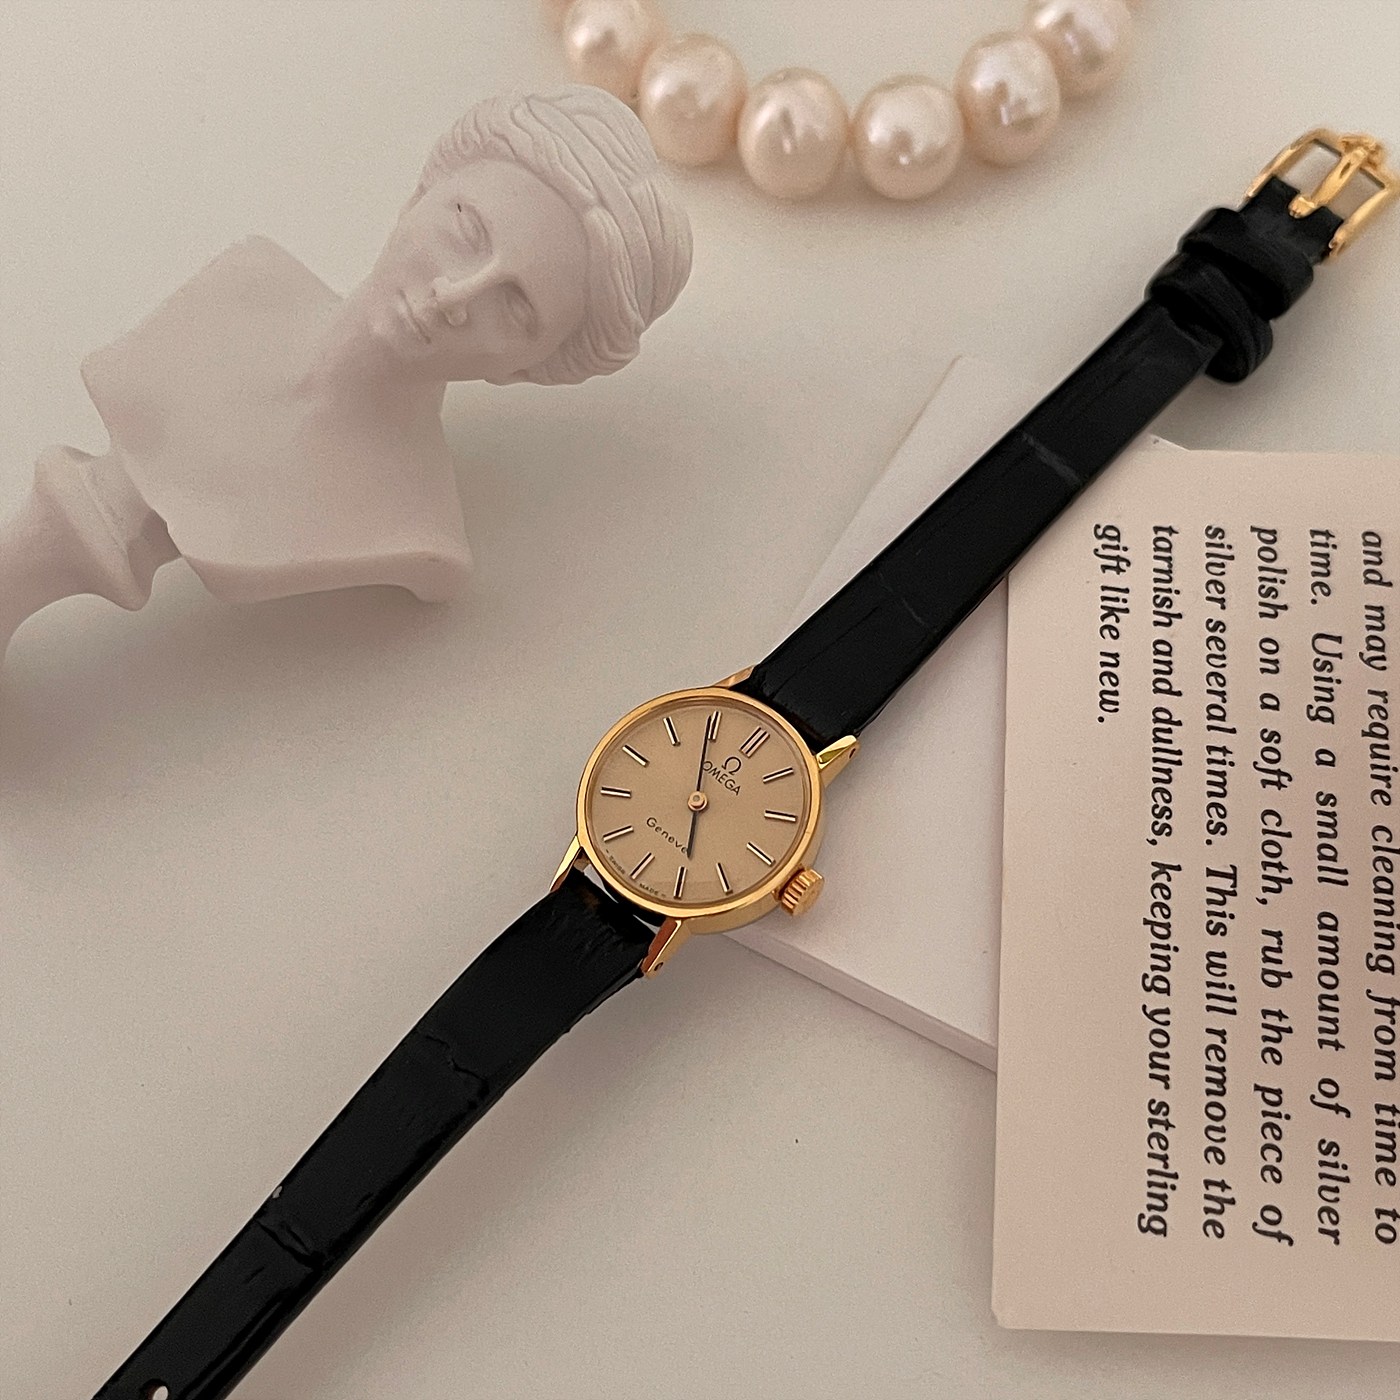 OMEGA geneve gold classic manual winding watch